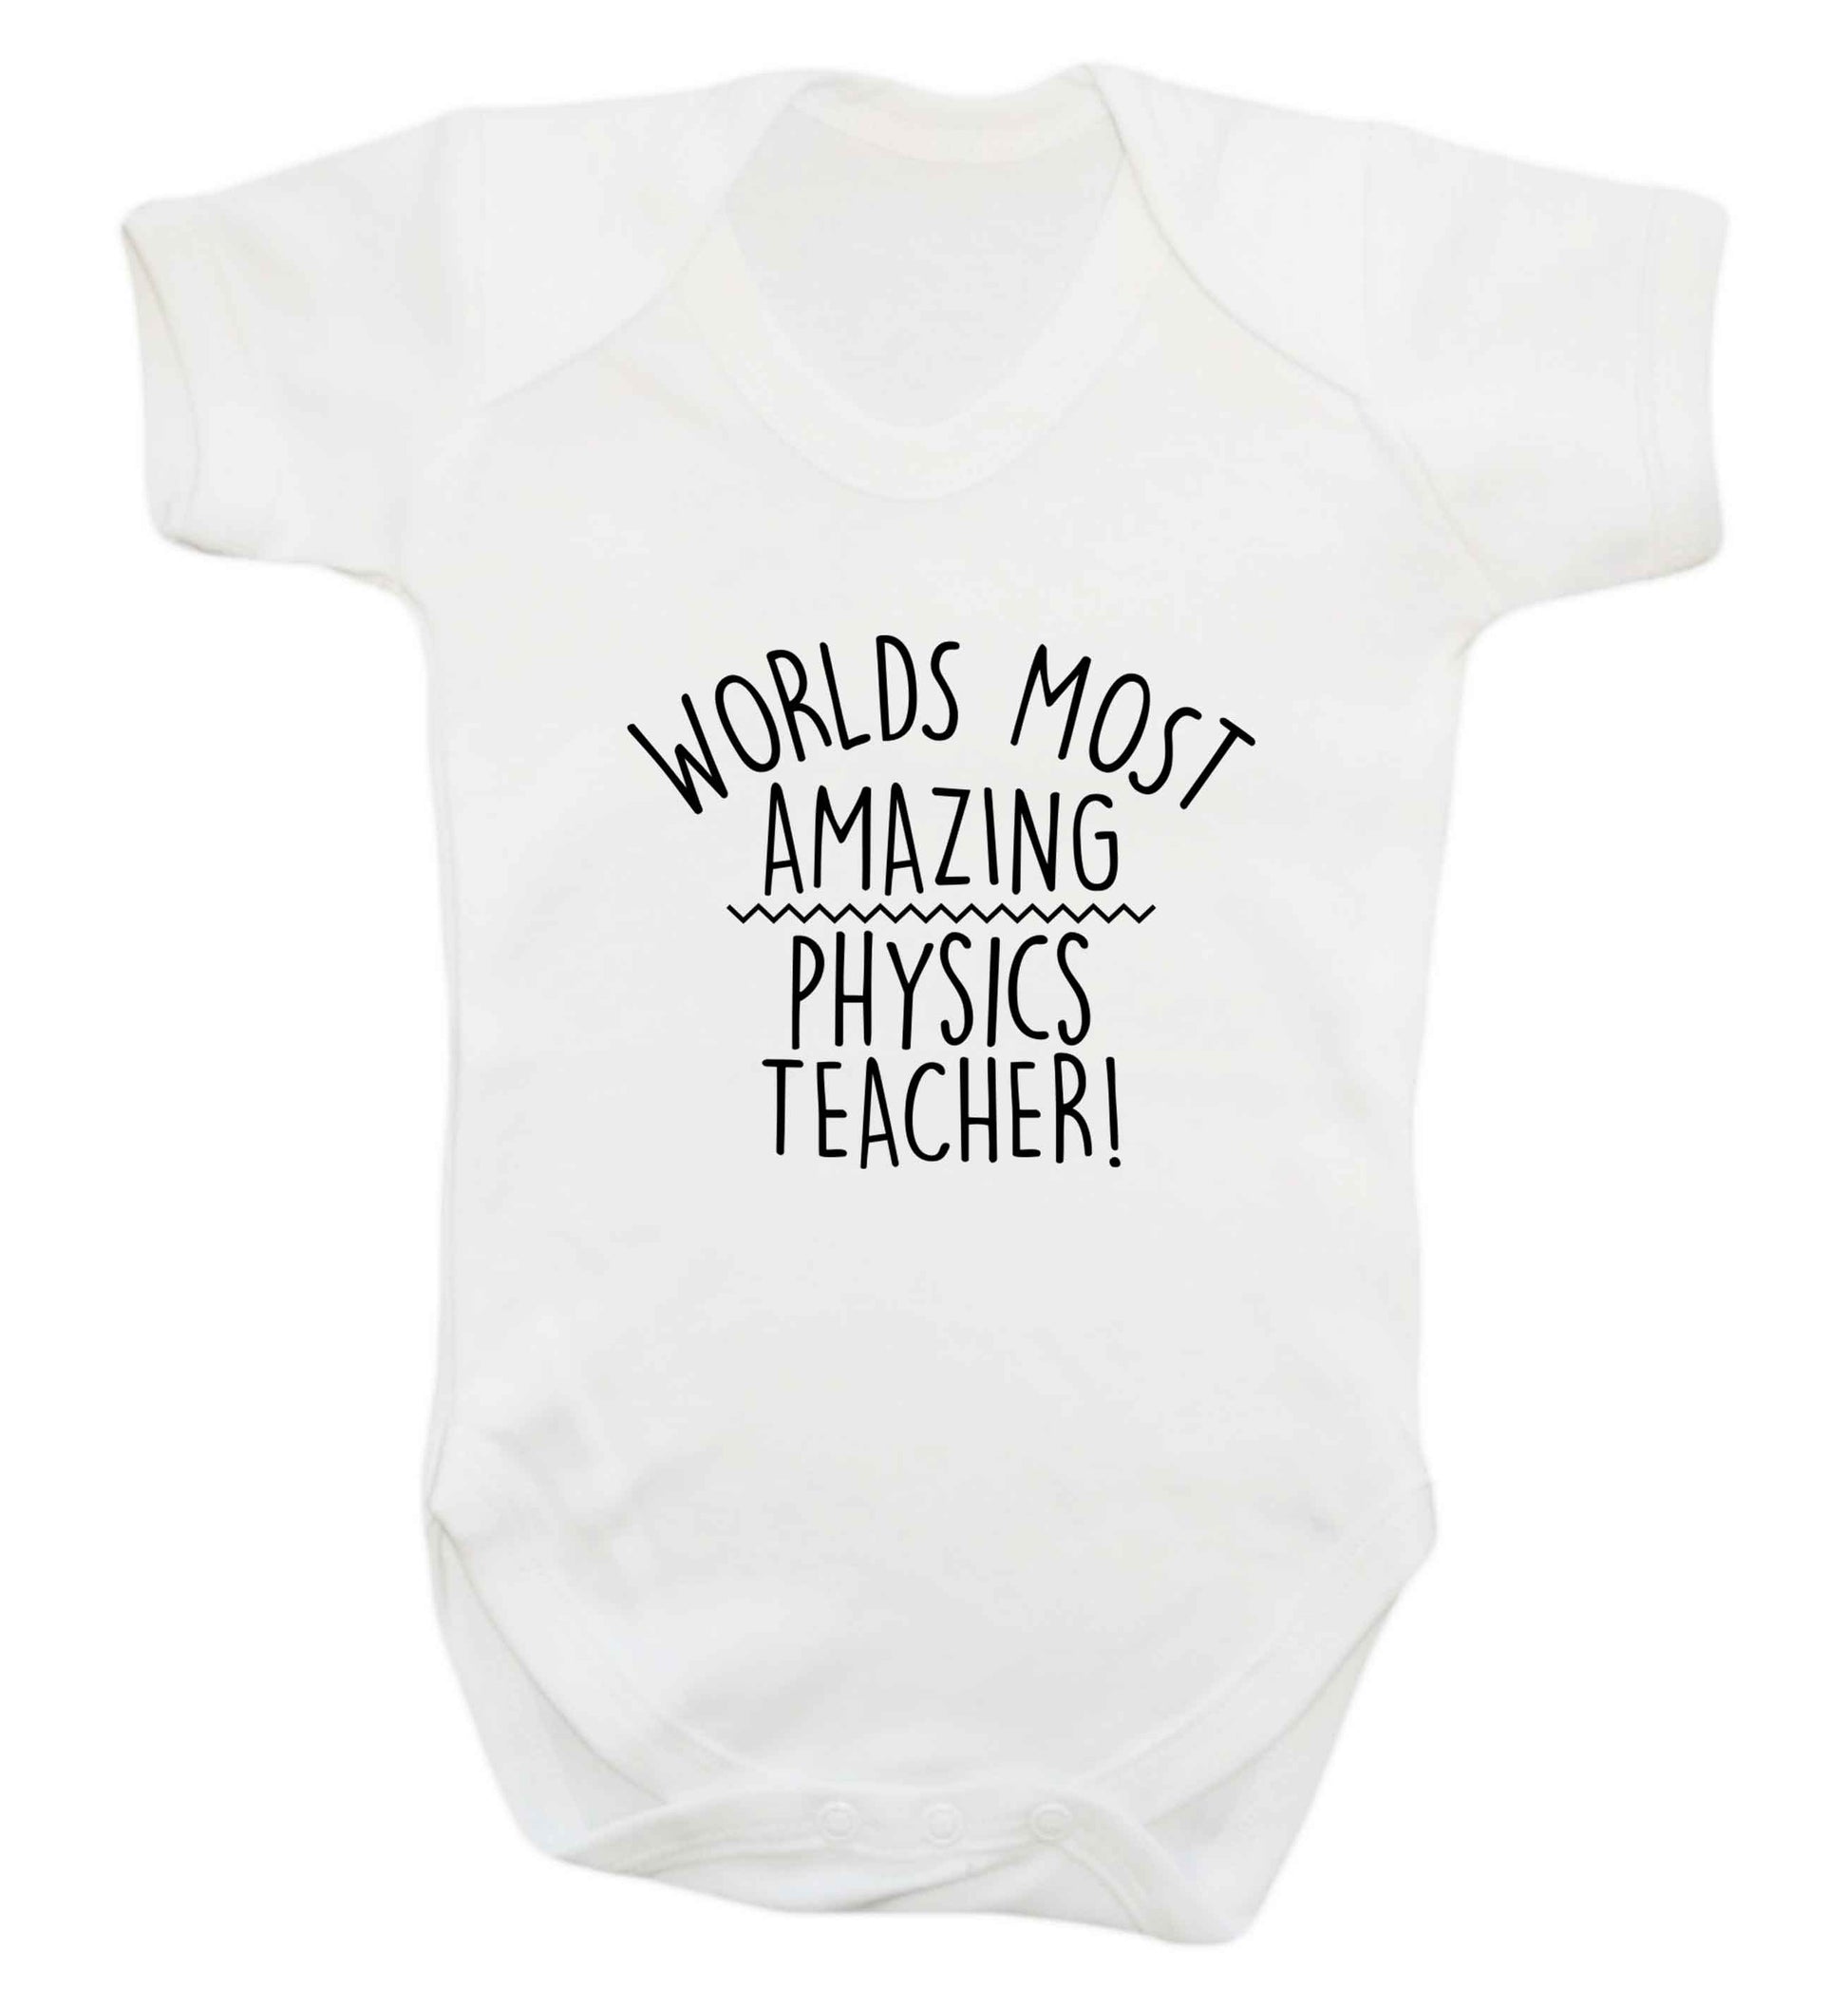 Worlds most amazing physics teacher baby vest white 18-24 months